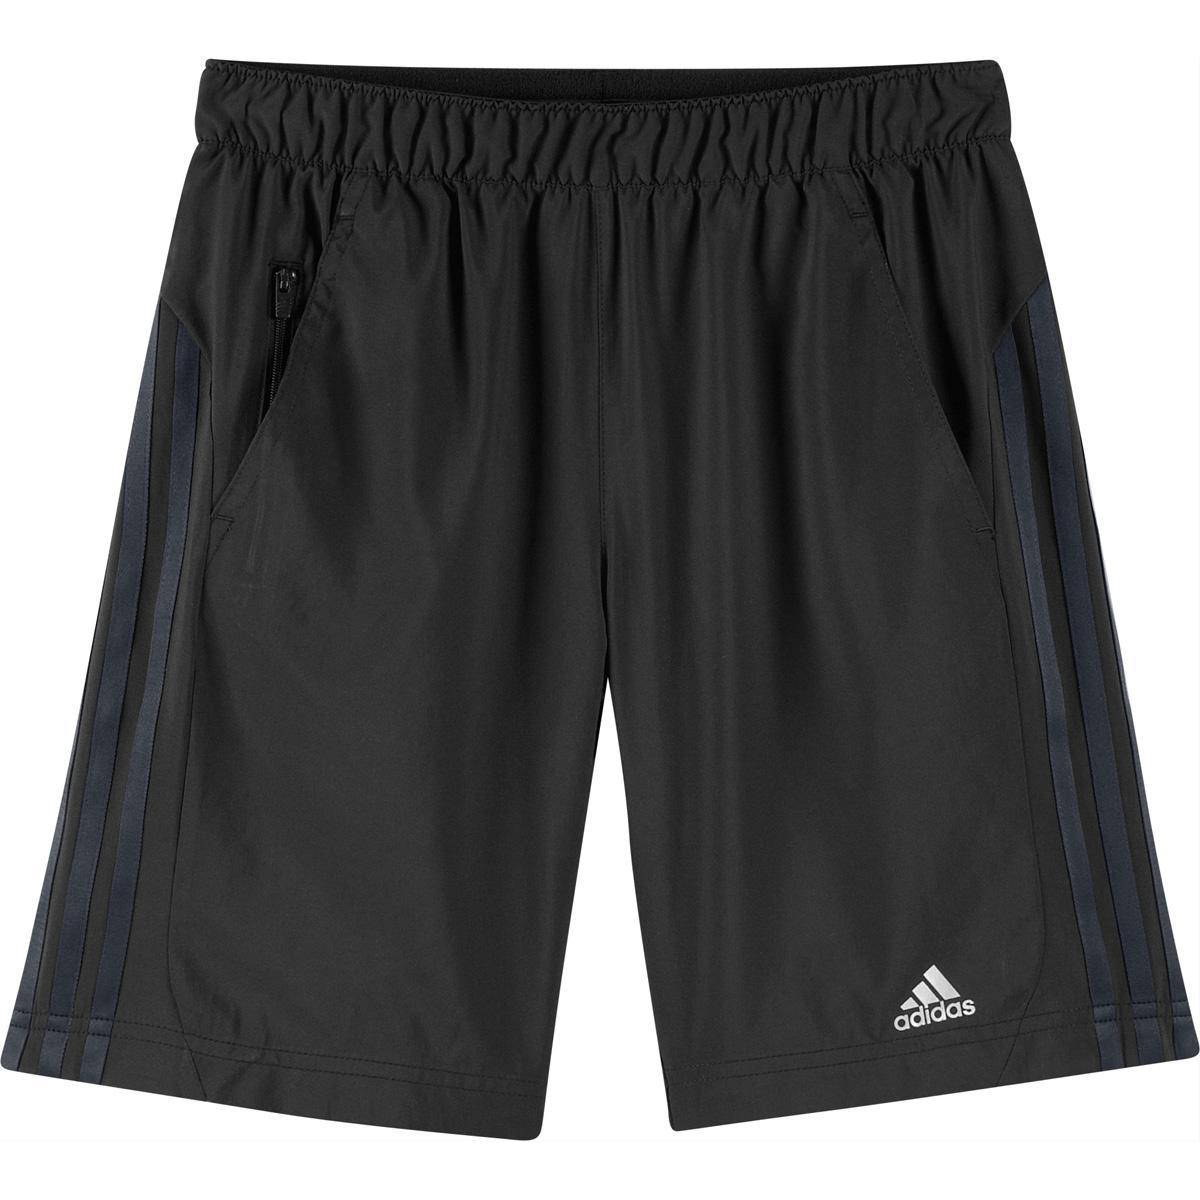 Adidas Kids Clima365 Shorts - Black - Tennisnuts.com